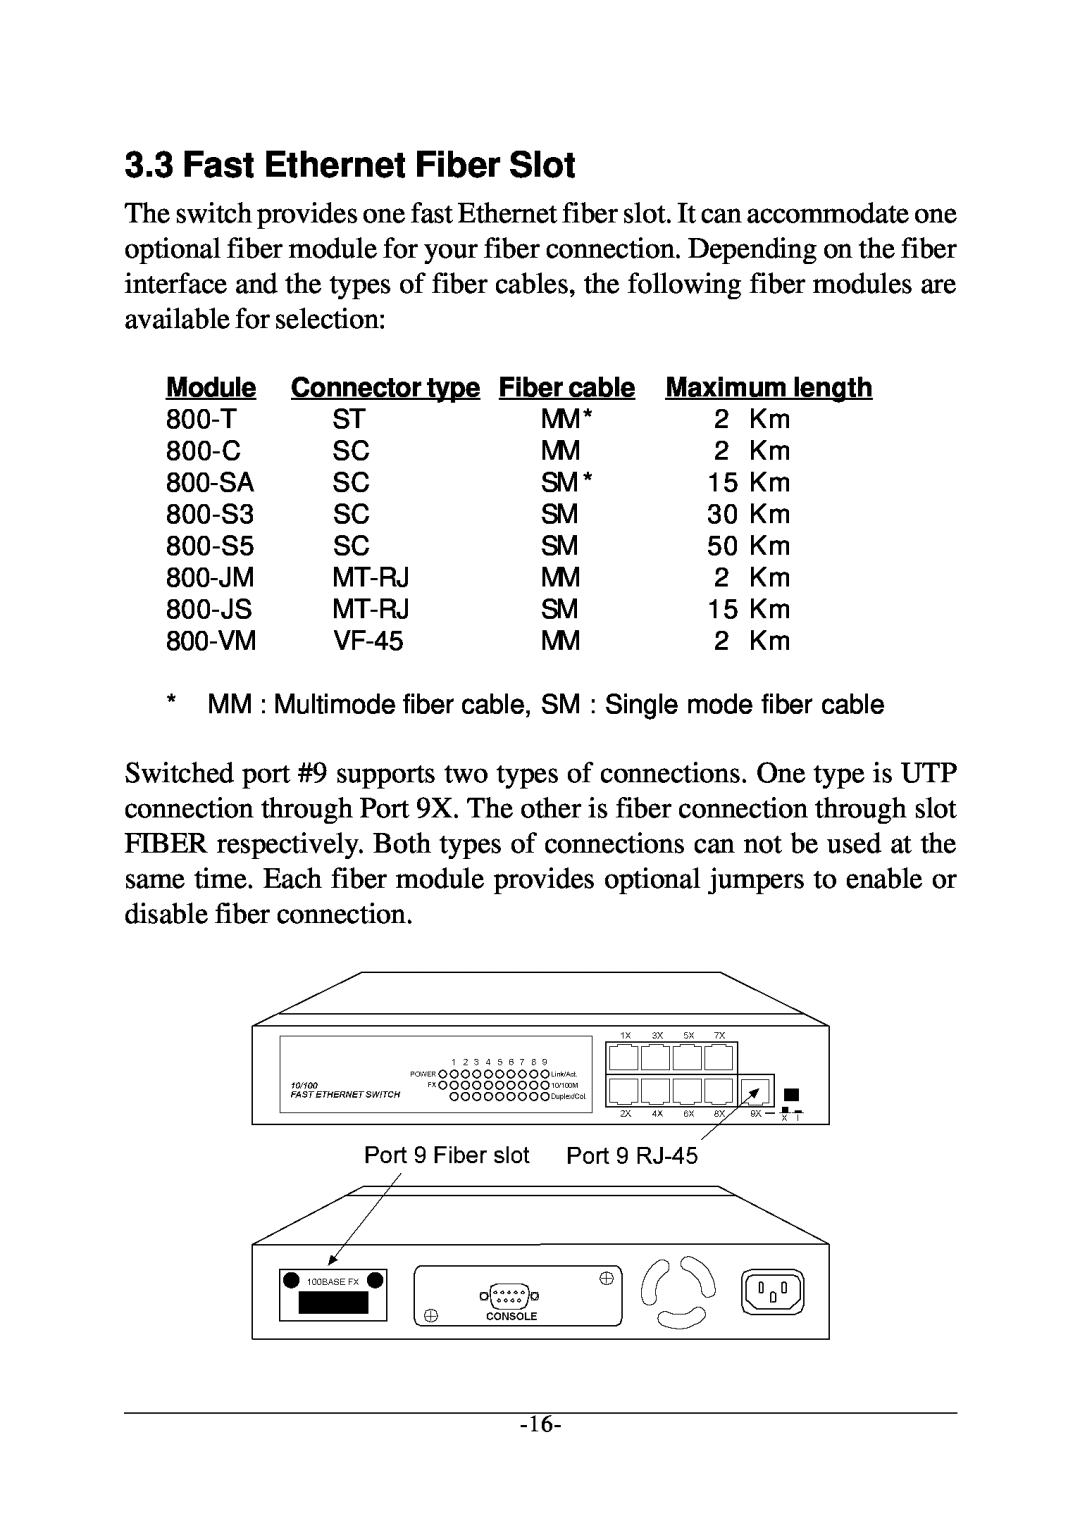 Xerox KS-801 operation manual Fast Ethernet Fiber Slot 